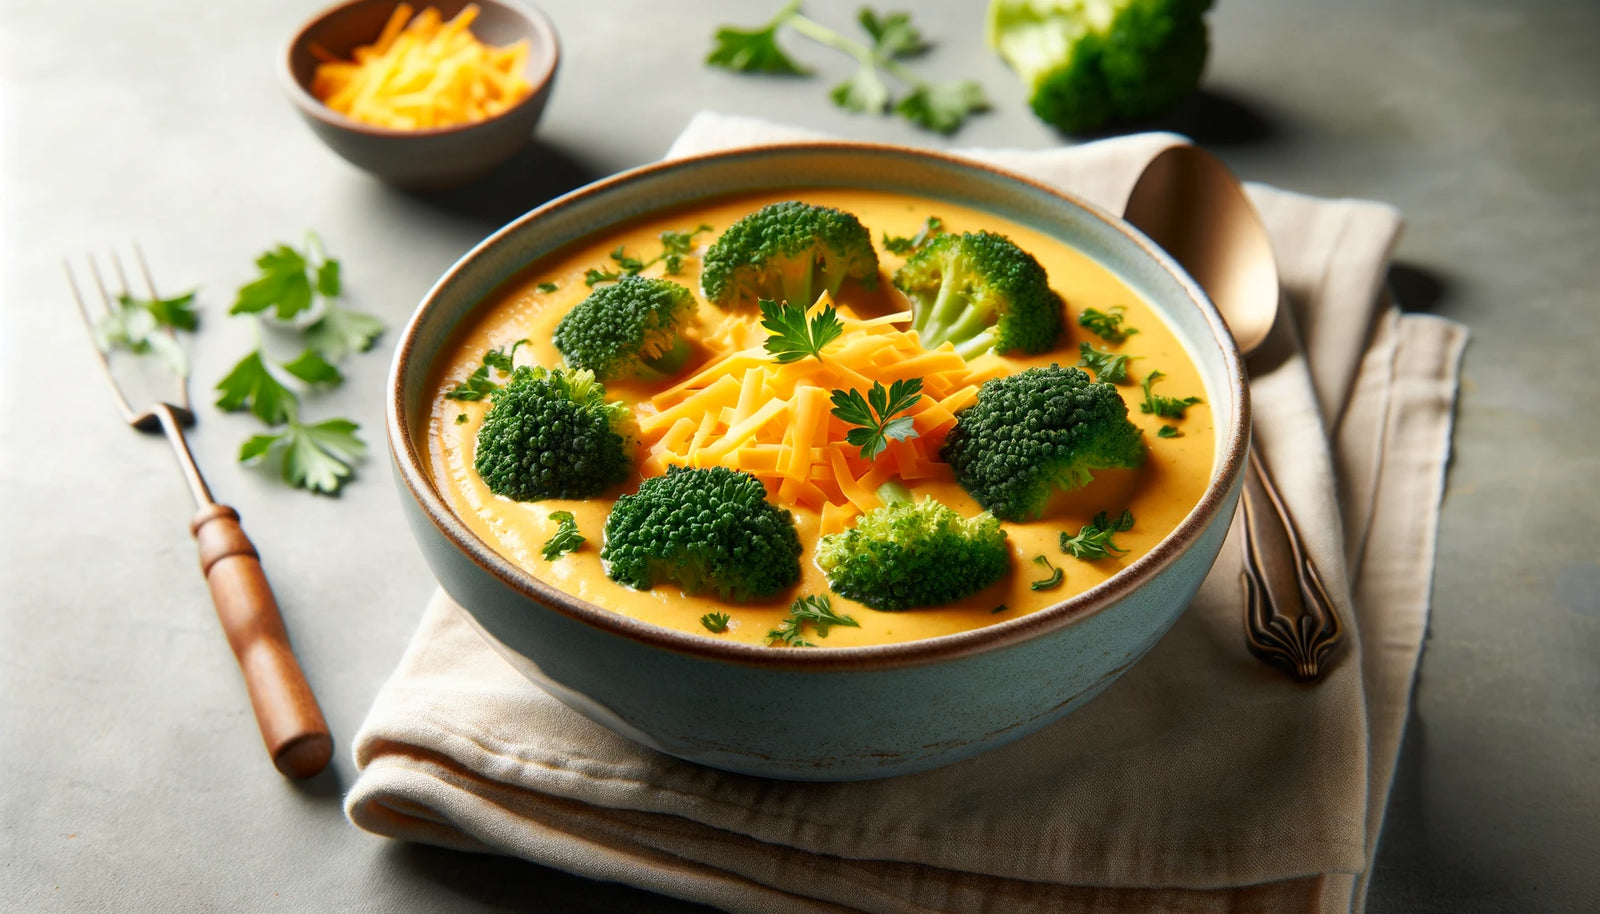 Ultimate Arteflame Grilled Broccoli Cheddar Soup